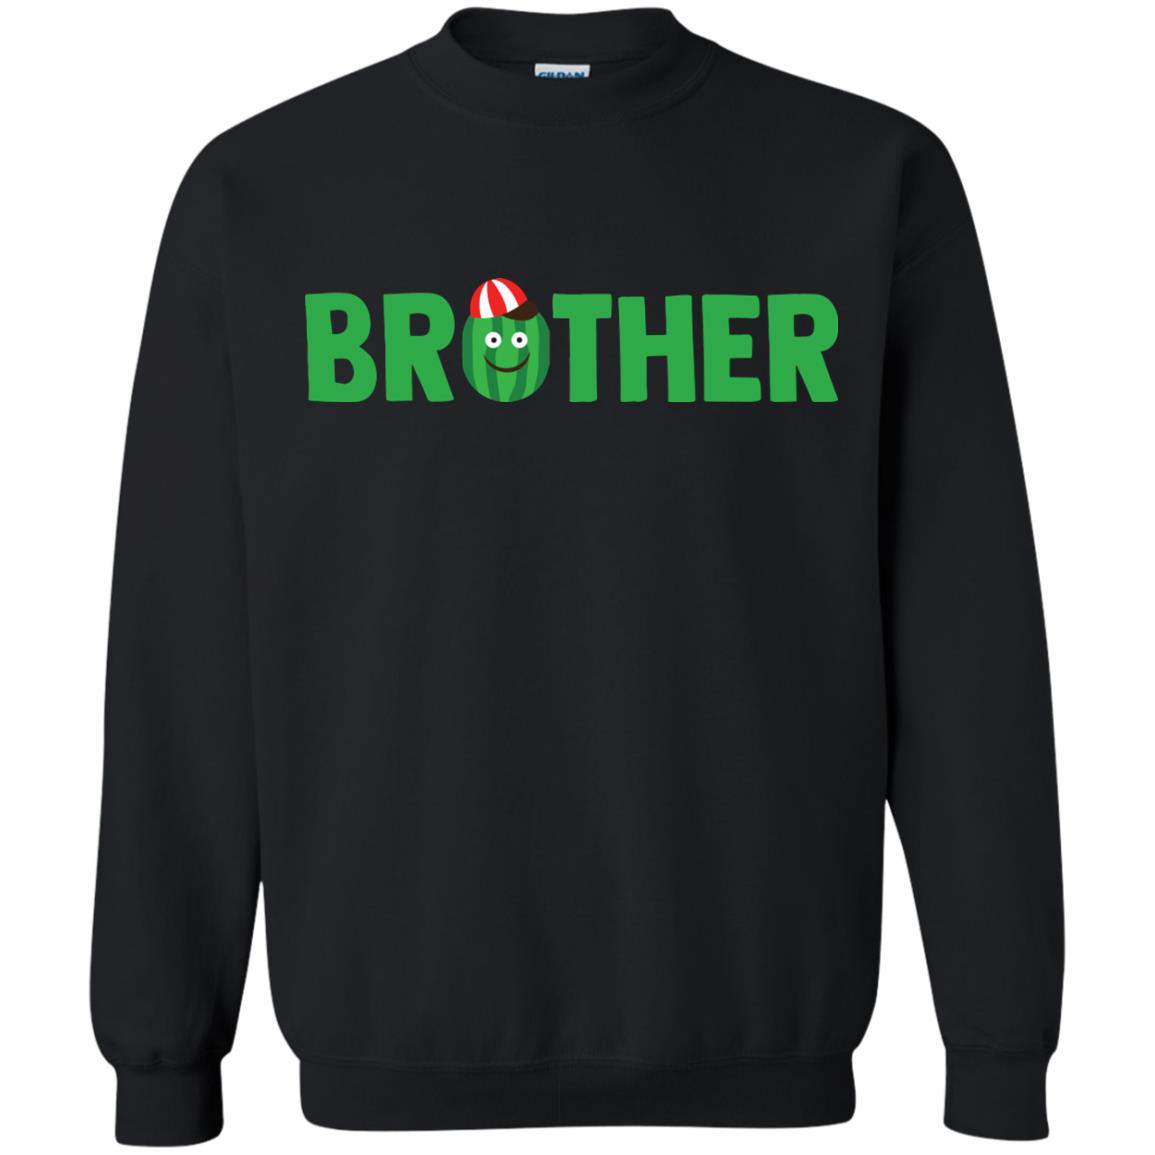 Brother Watermelon Funny Summer Melon Fruit Shirt For BrotherG180 Gildan Crewneck Pullover Sweatshirt 8 oz.